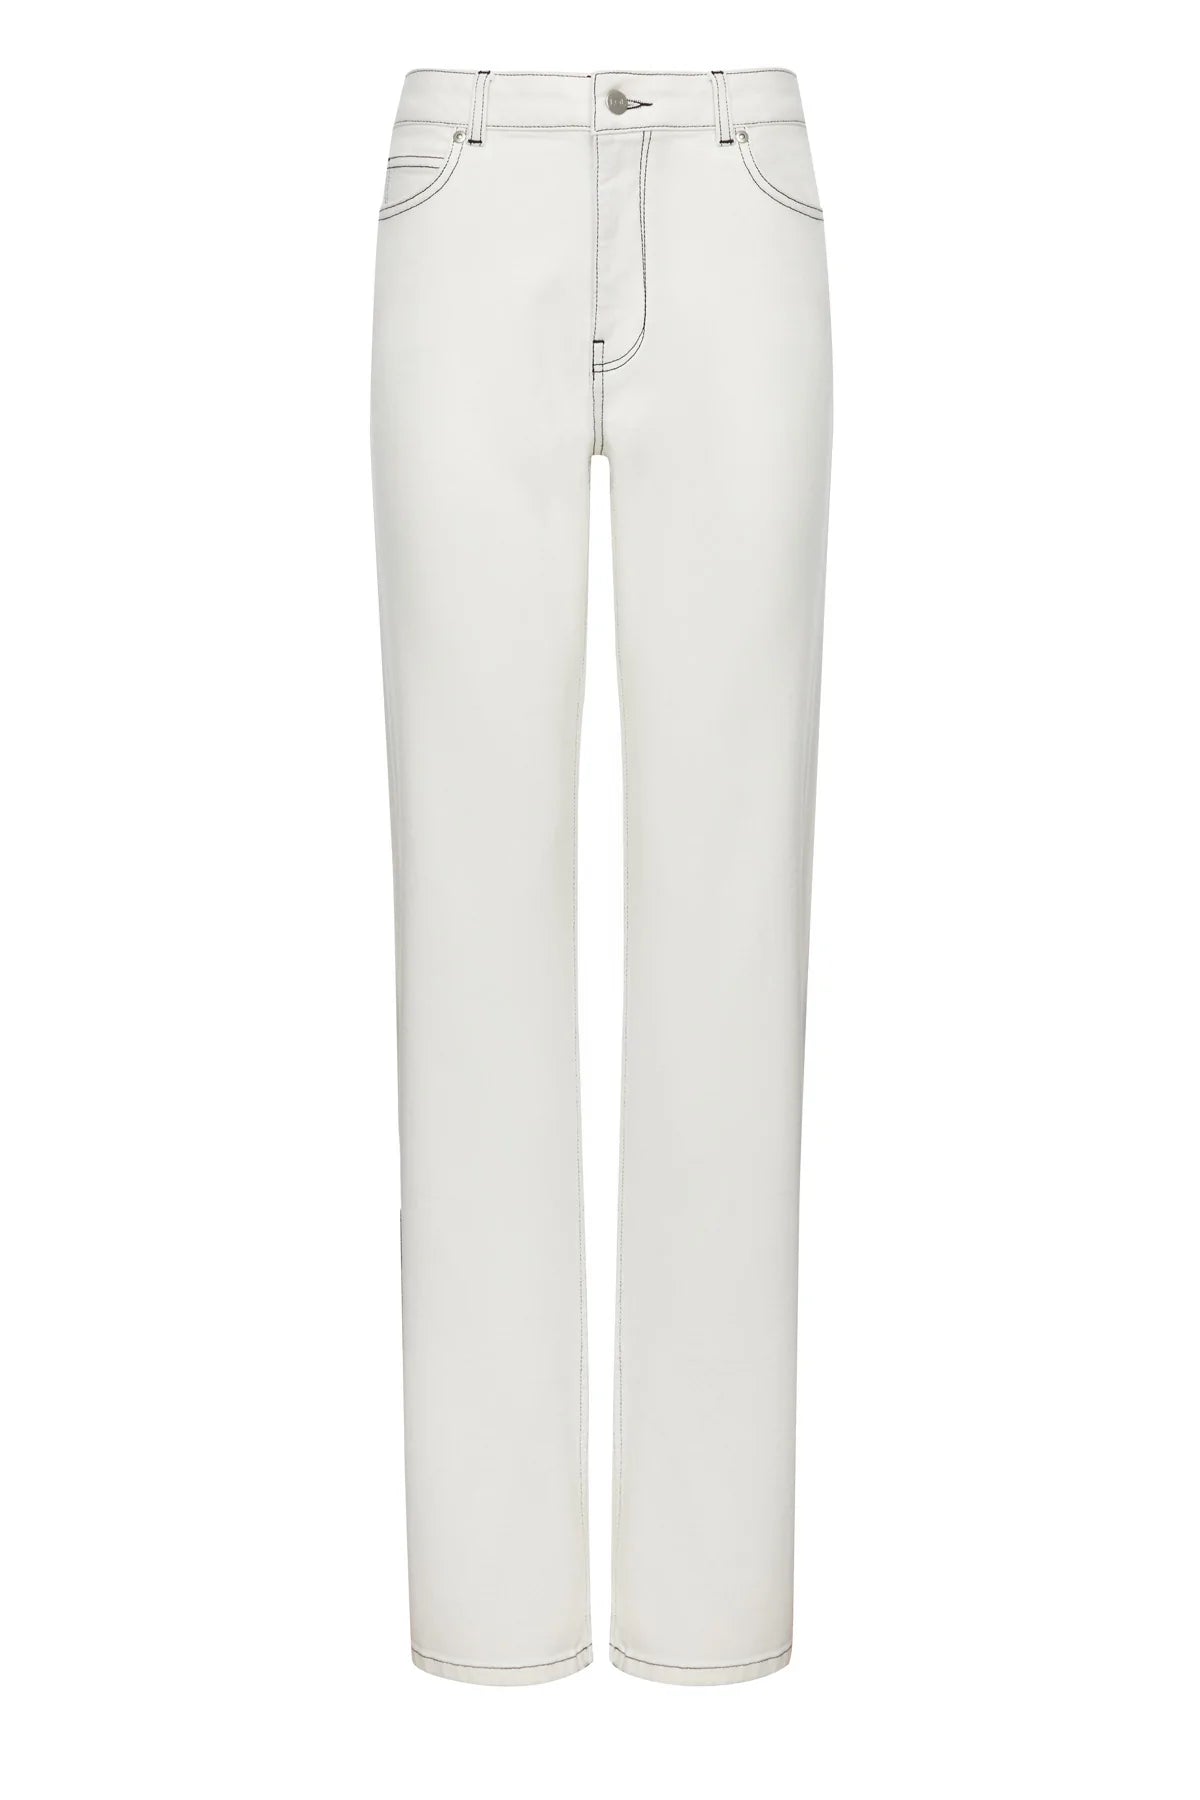 Amari - White Jeans